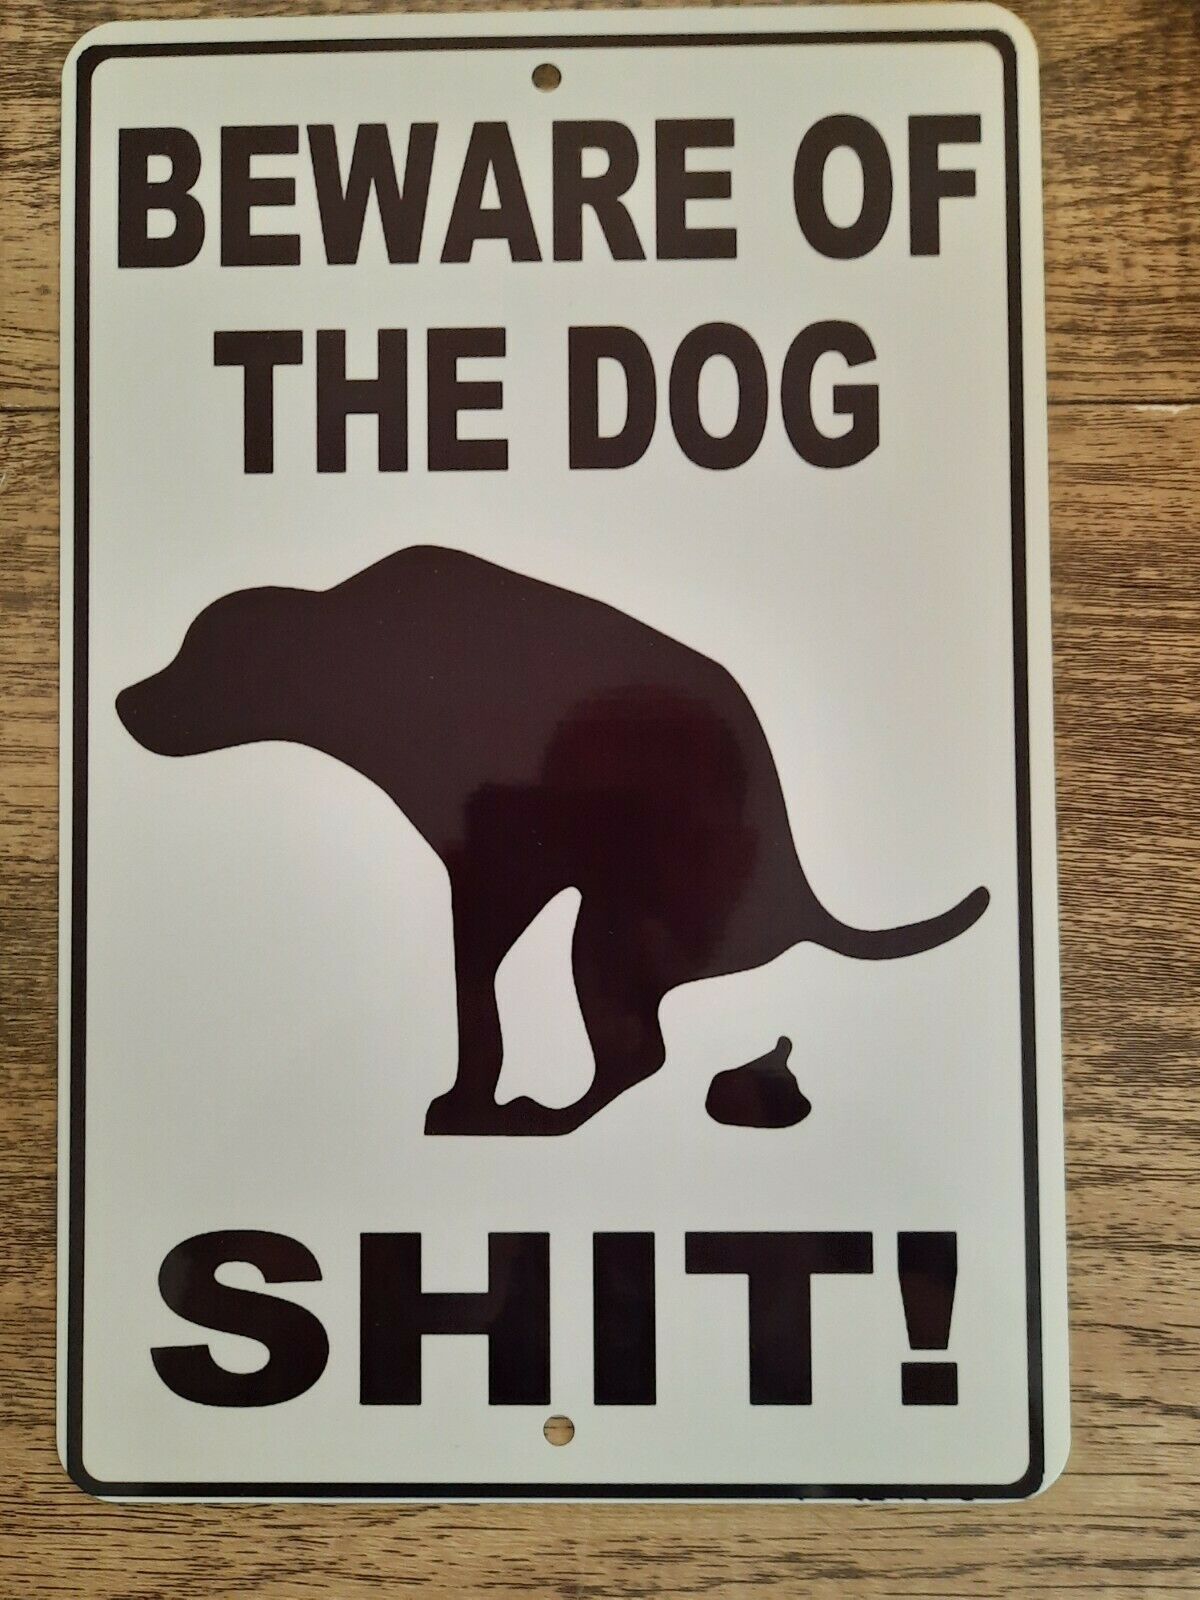 Beware of the Dog Shitt 8x12 Metal Wall Caution Warning Sign